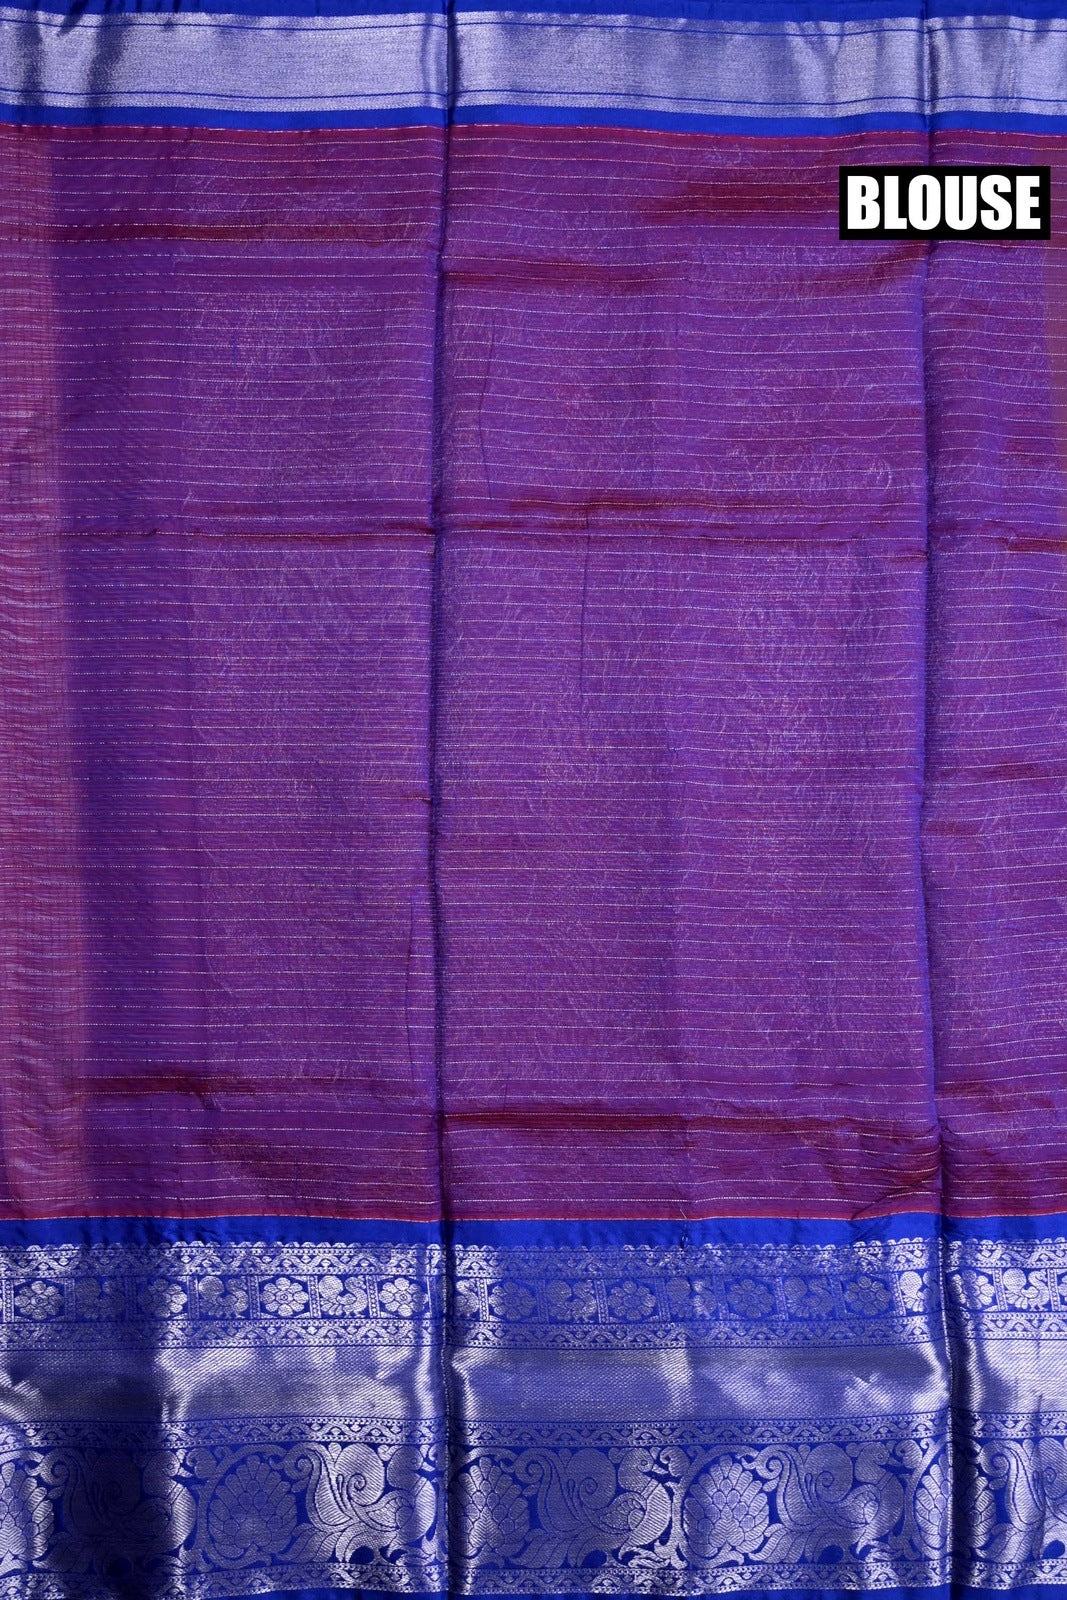 Mangalgiri pattu saree olive green and blue color with allover silver zari checks weeving, big zari border and plain blouse